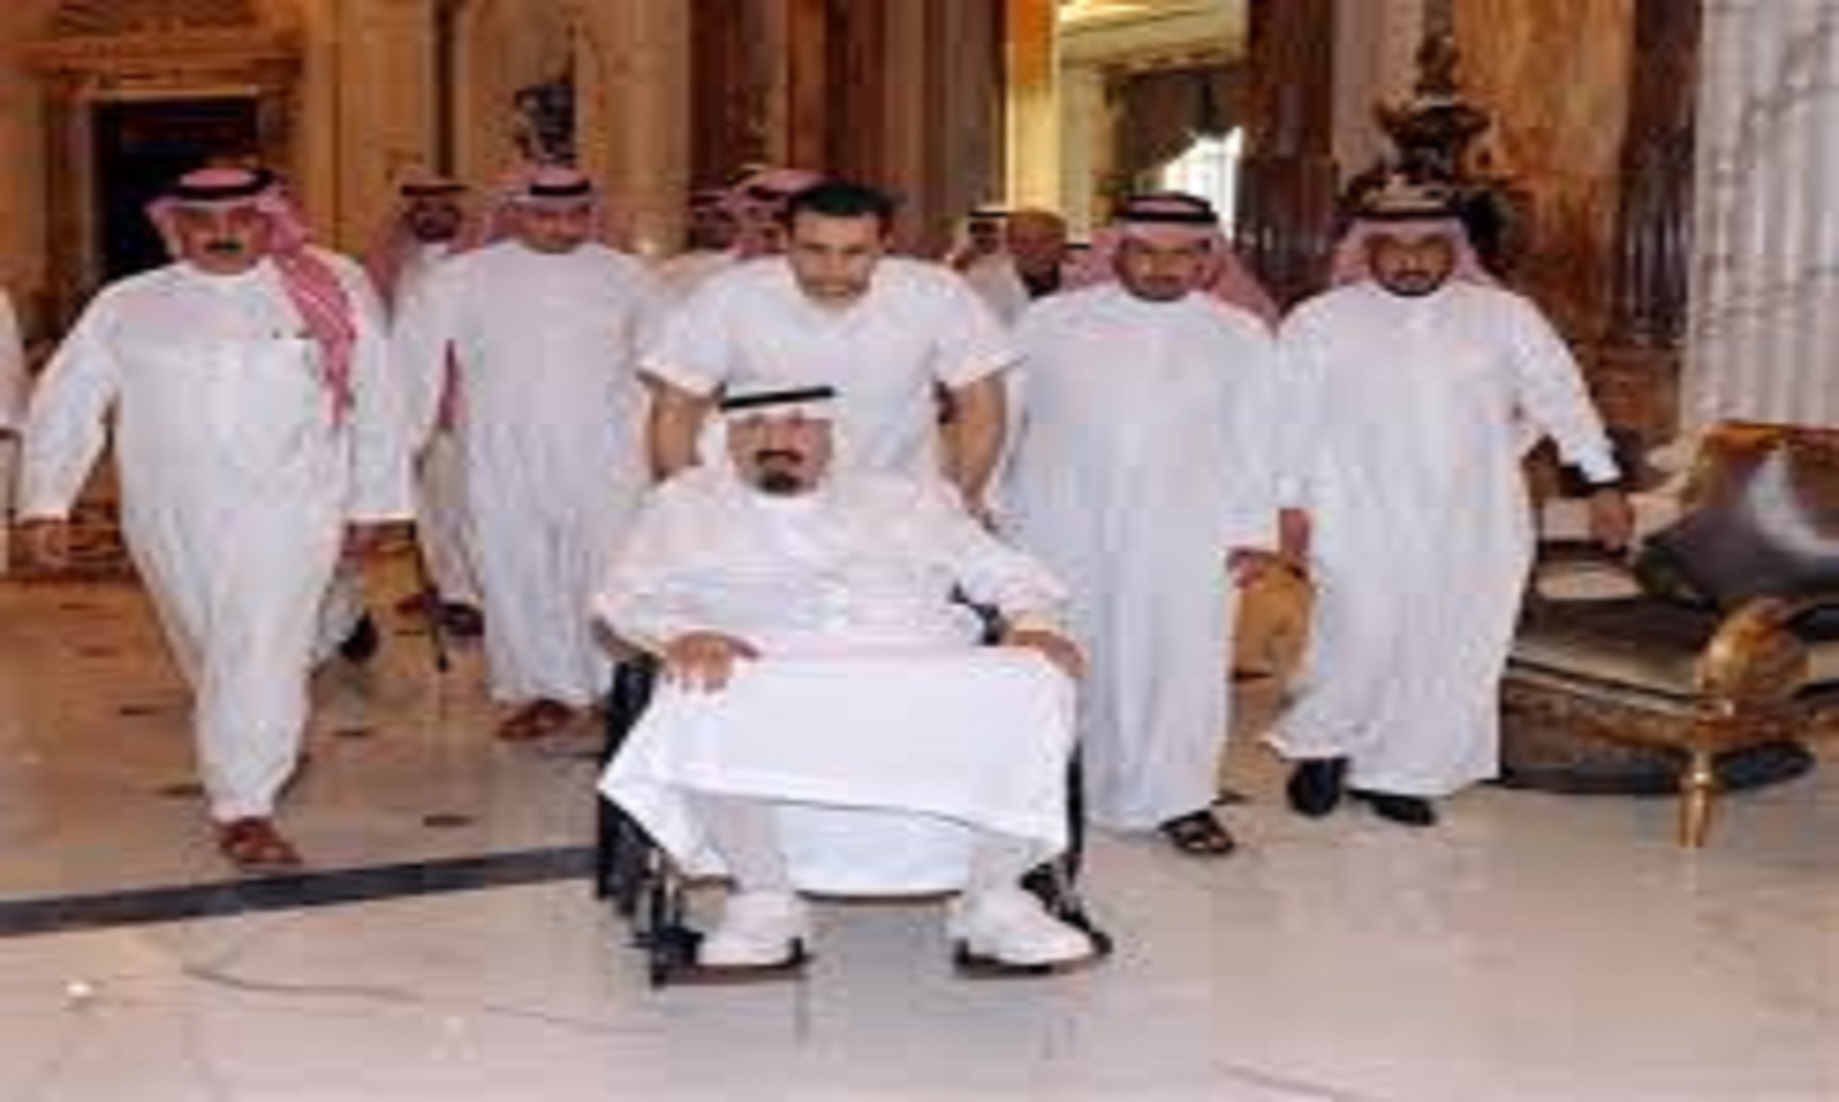 Saudi King Admitted To Hospital For Medical Checkups: Royal Court